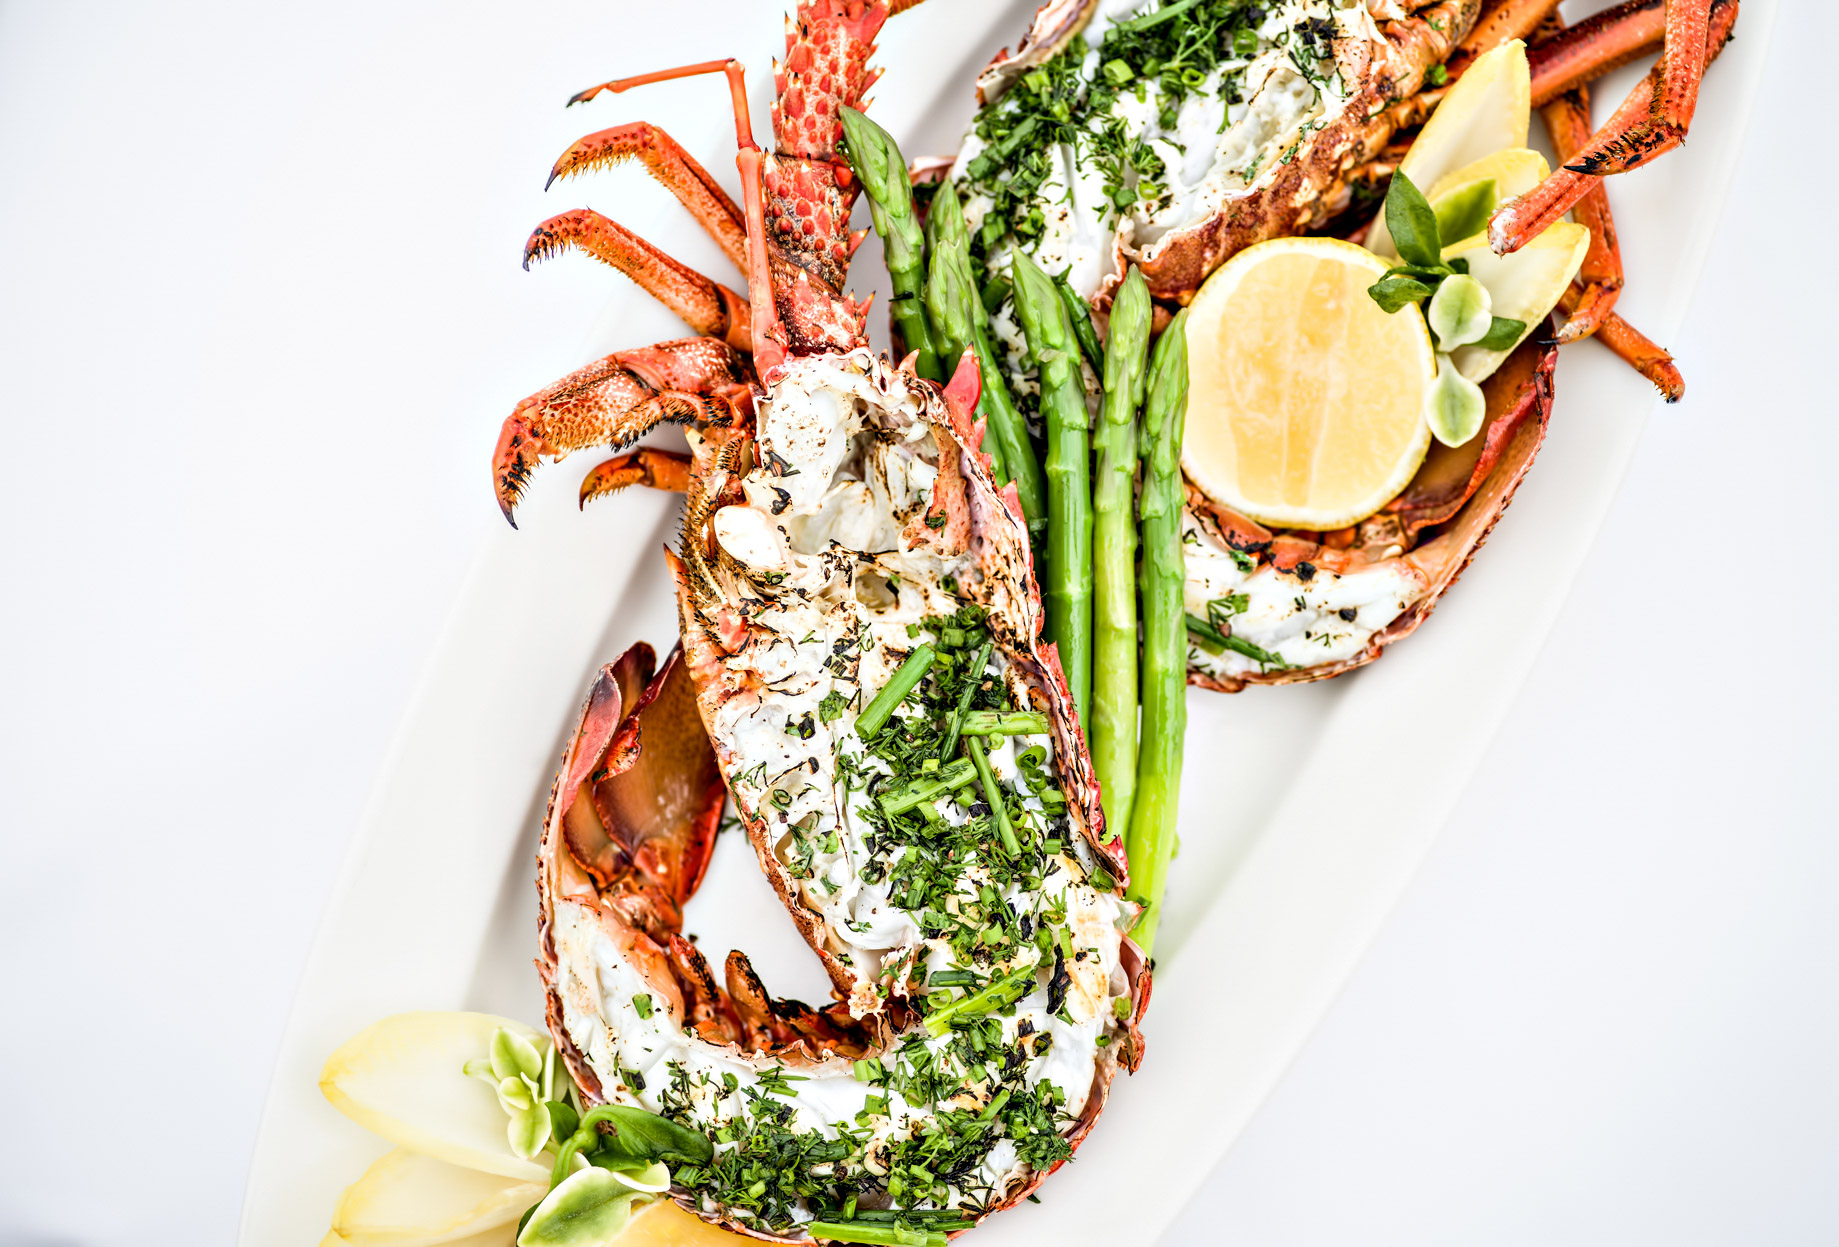 InterContinental Hayman Island Resort – Whitsunday Islands, Australia – Lobster Pacific Restaurant